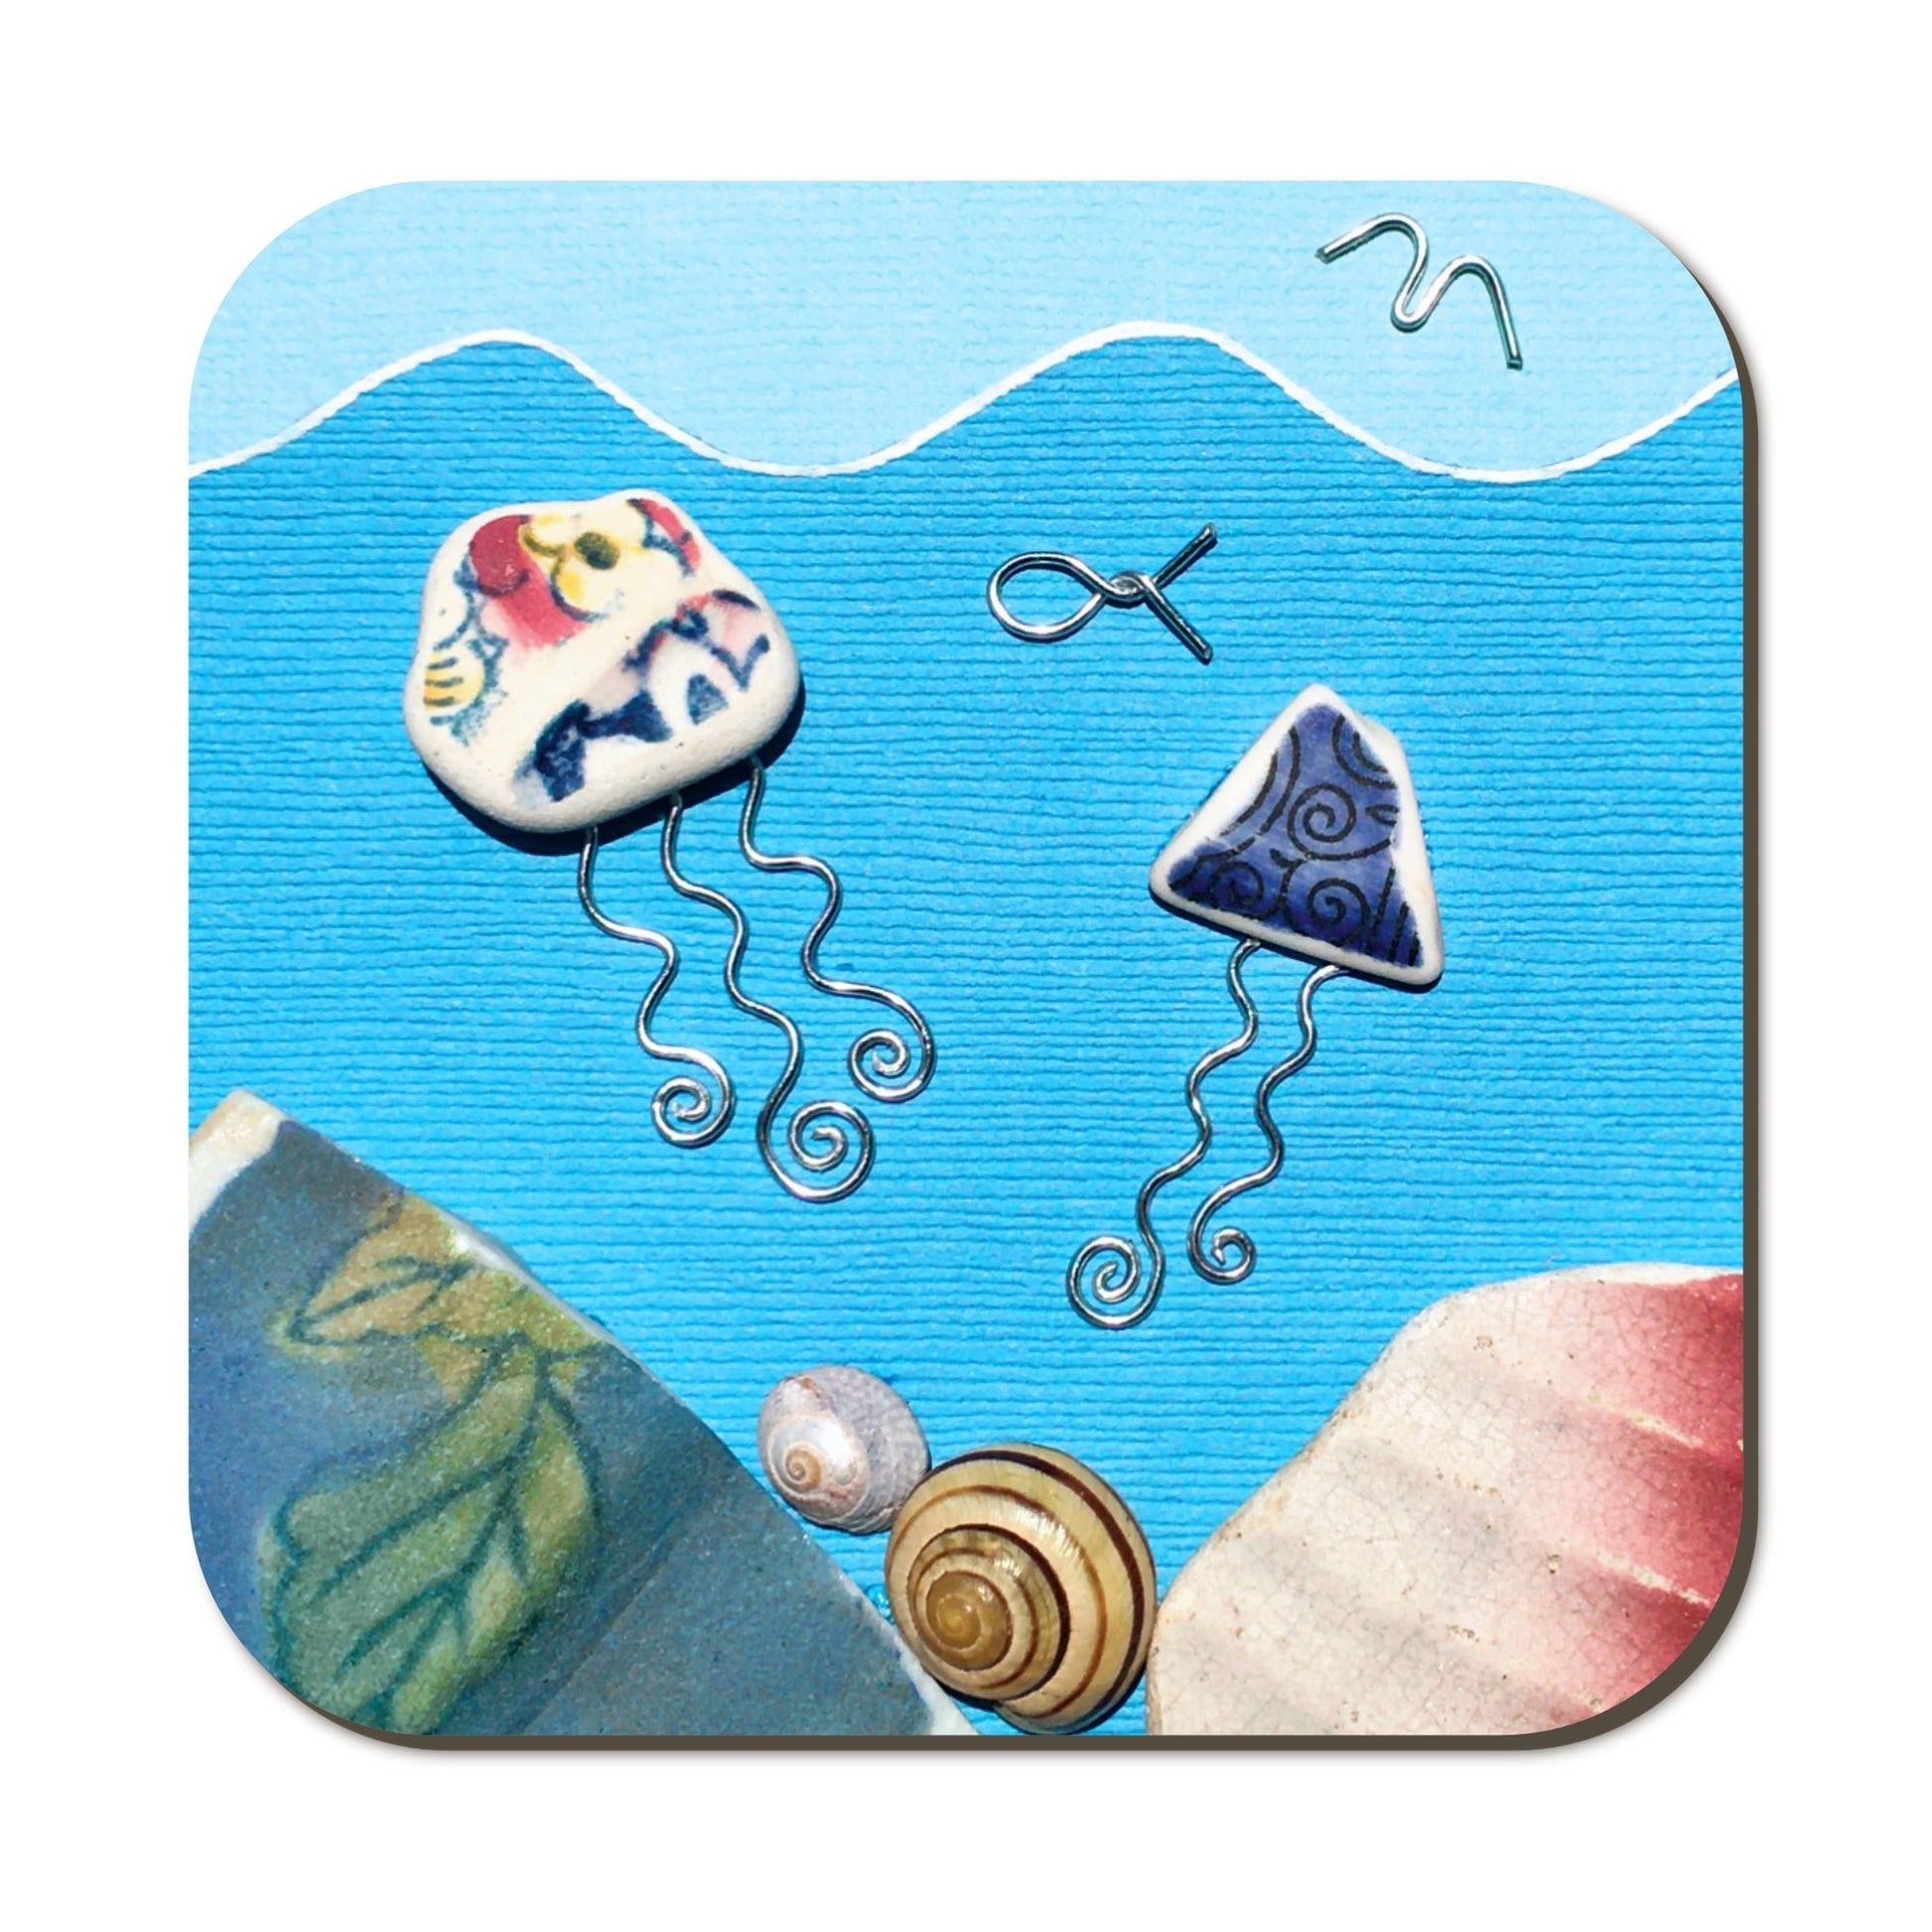 Coaster Set x 4 - Beach Pebble Art - Puffins, Seagulls, Highland Cows, Jellyfish - East Neuk Beach Crafts